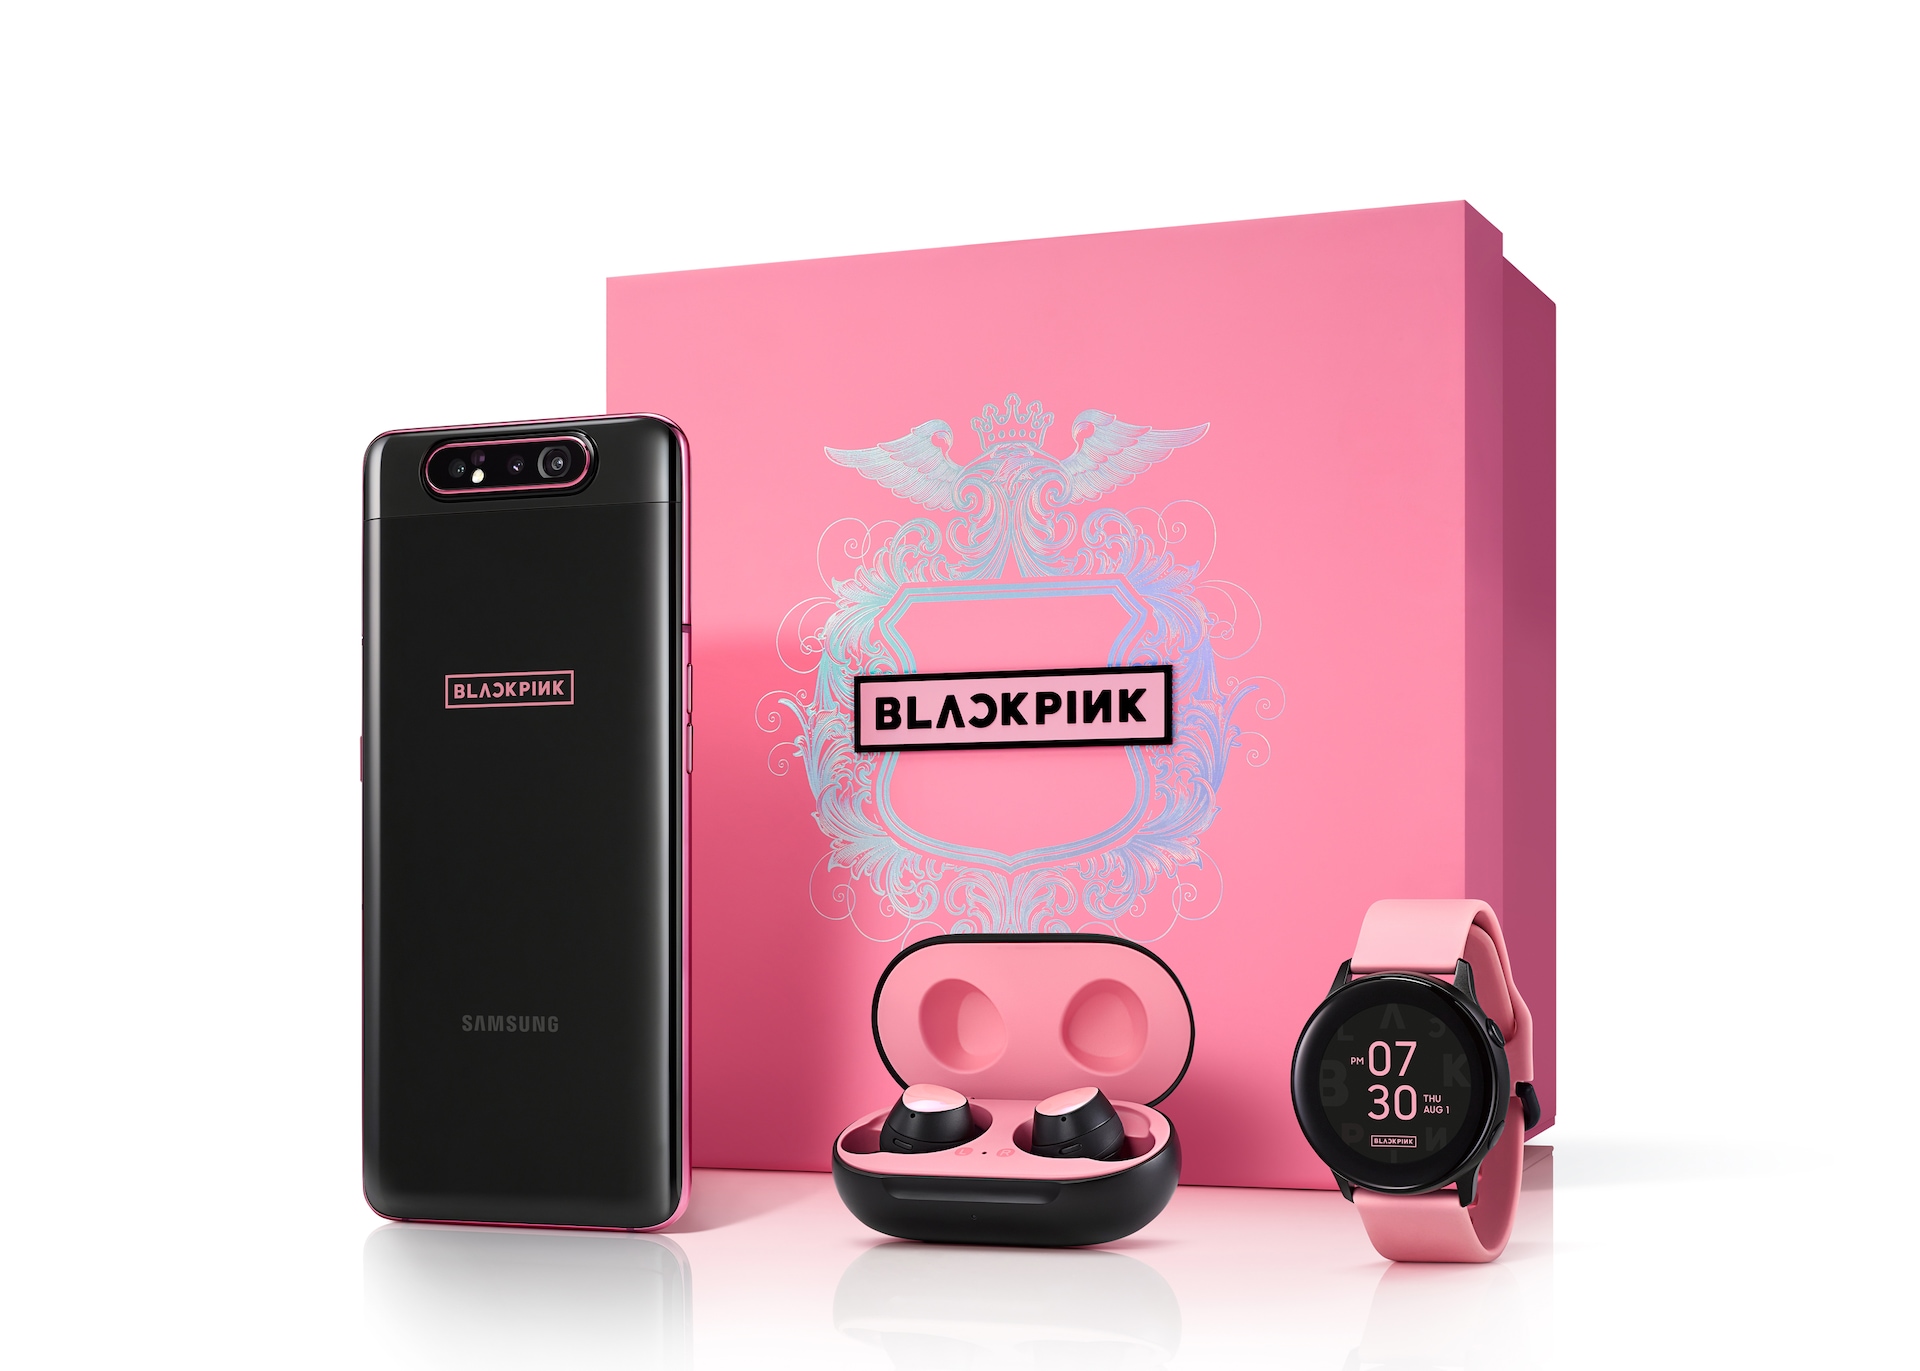 Beli Samsung Galaxy A80 BlackPink Edition - Harga & Offers